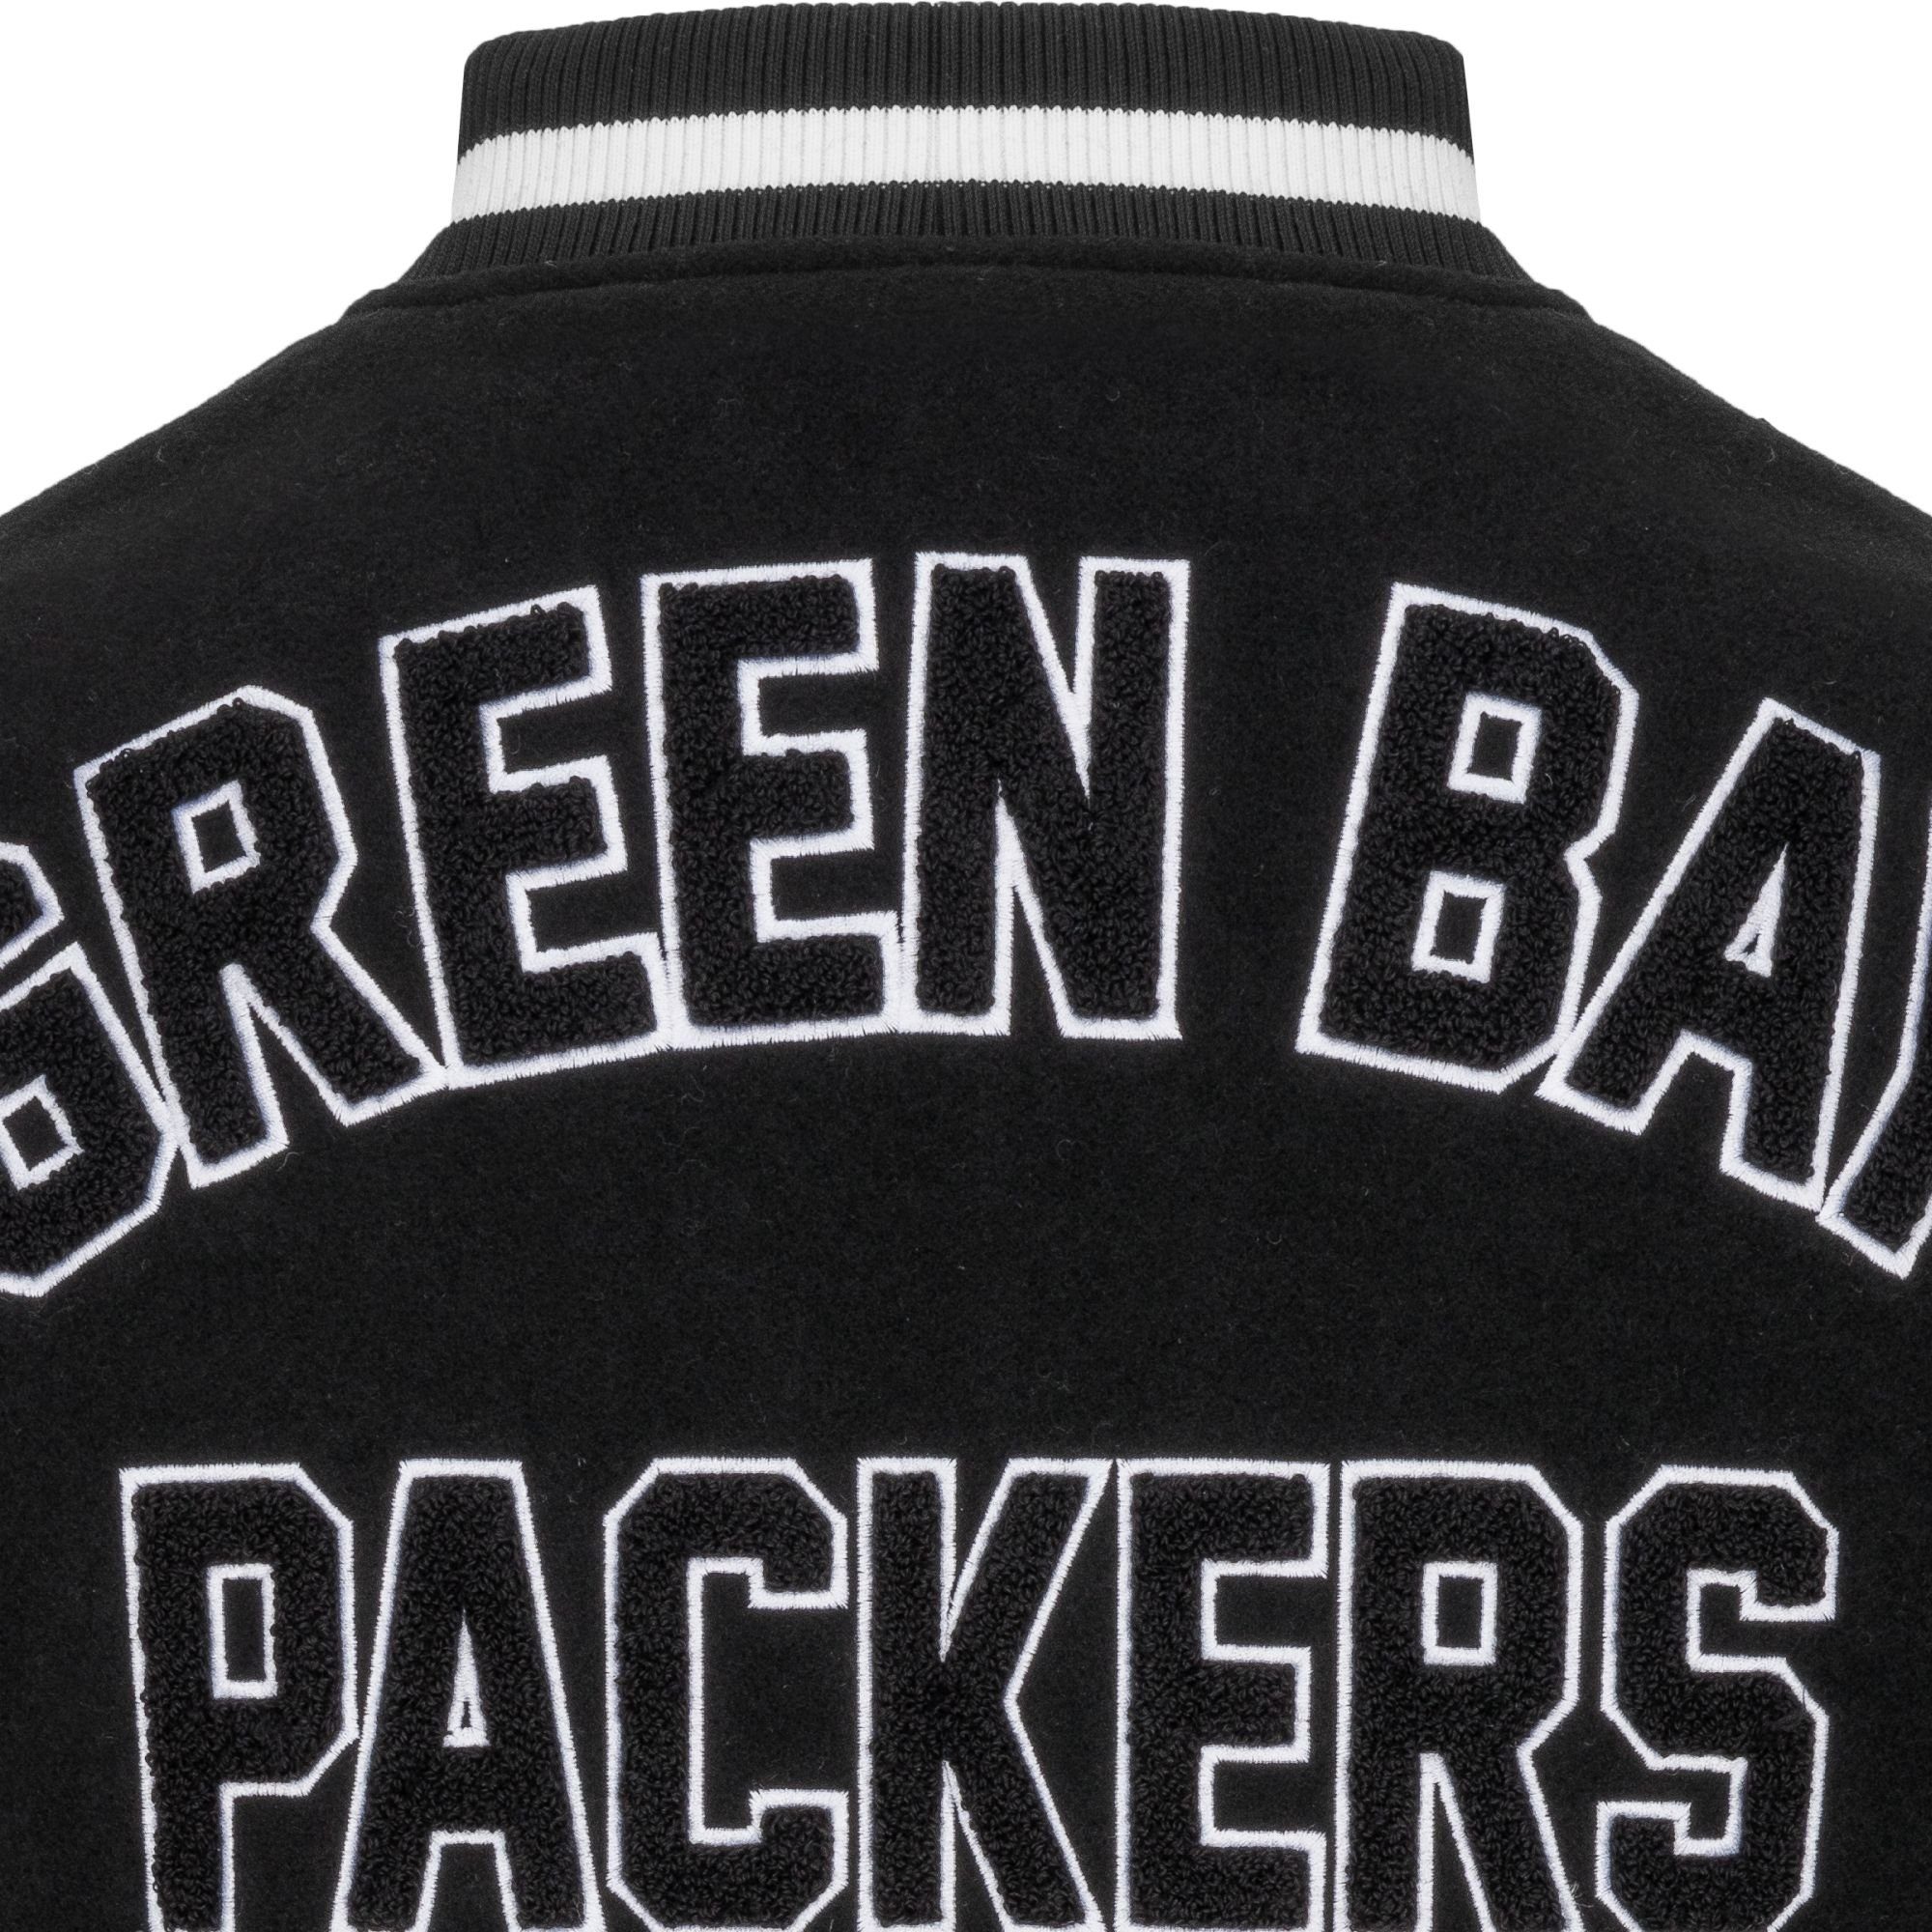 SIDELINE Packers Varsity Green New Bay NFL Collegejacke Era